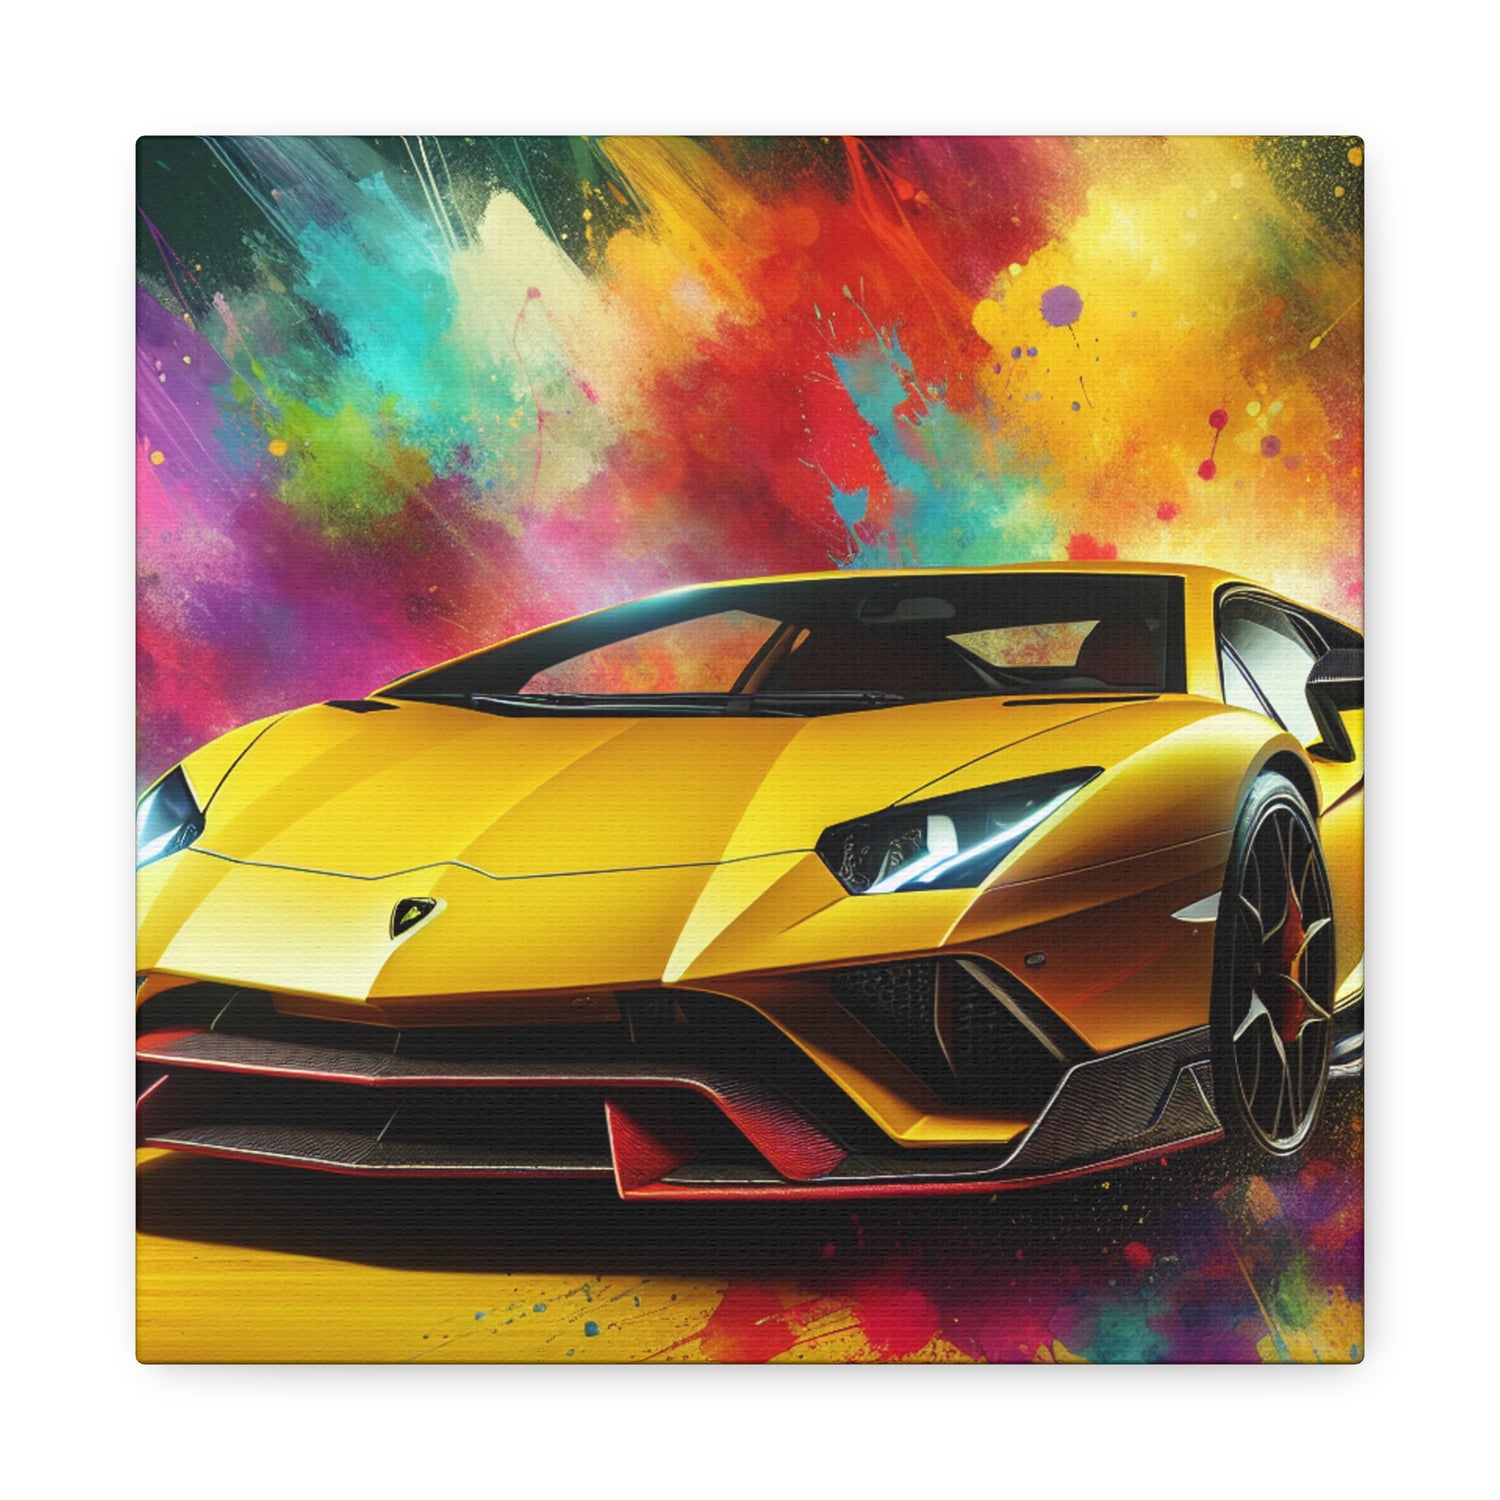 Lamborghini Aventador Wall Art, Luxury Car Print, Vehicle Canva Painting, Automobile Home Decor, Sports Car Lover Gift, Stunning Artwork